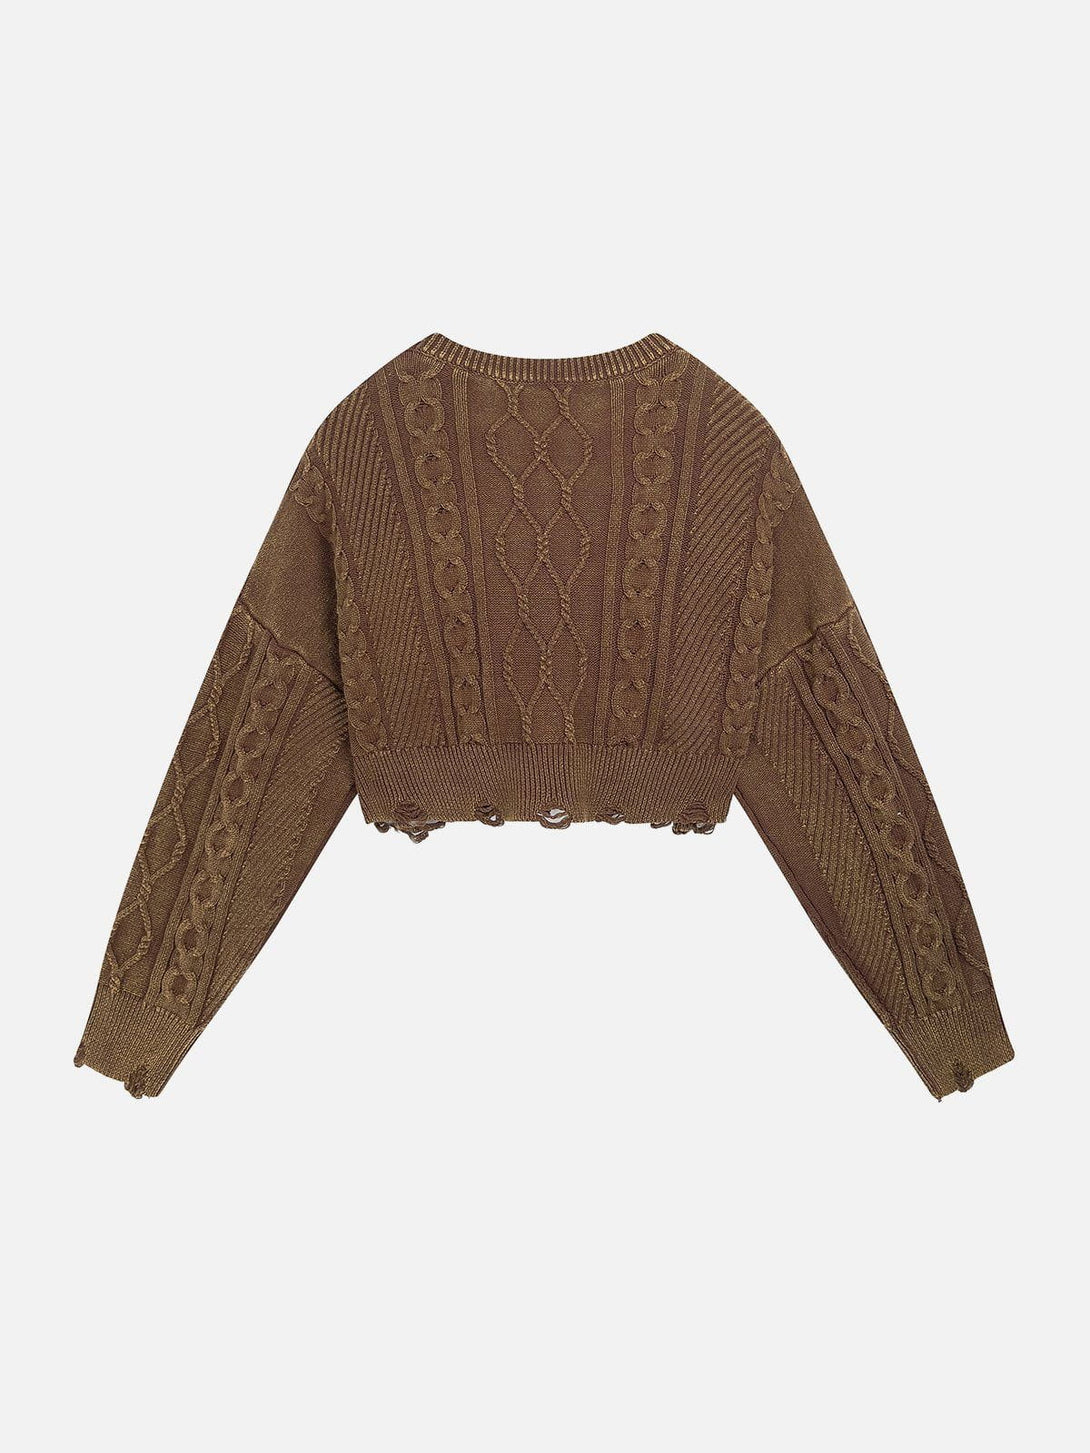 Majesda® - Vintage Washed Jacquard Raw Edge Sweater outfit ideas streetwear fashion